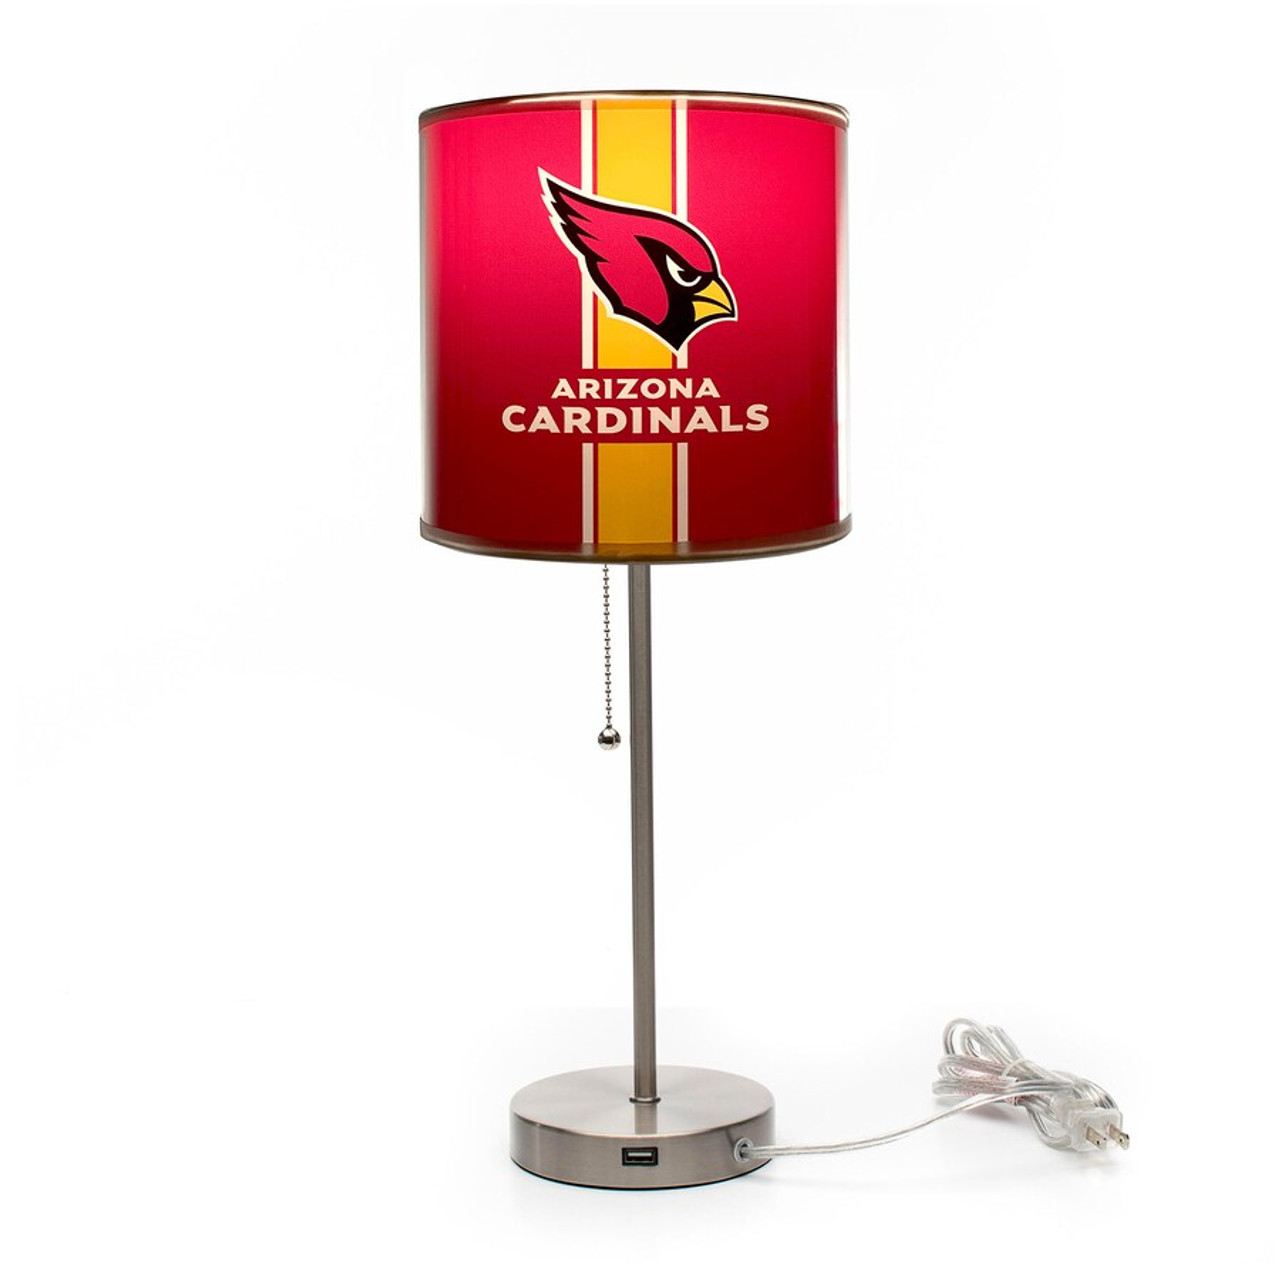 Arizona, ARI, AZ, Cardinals, 19", Tall, Chrome, Table, Desk, Lamp, 609-1029, Imperial, NFL